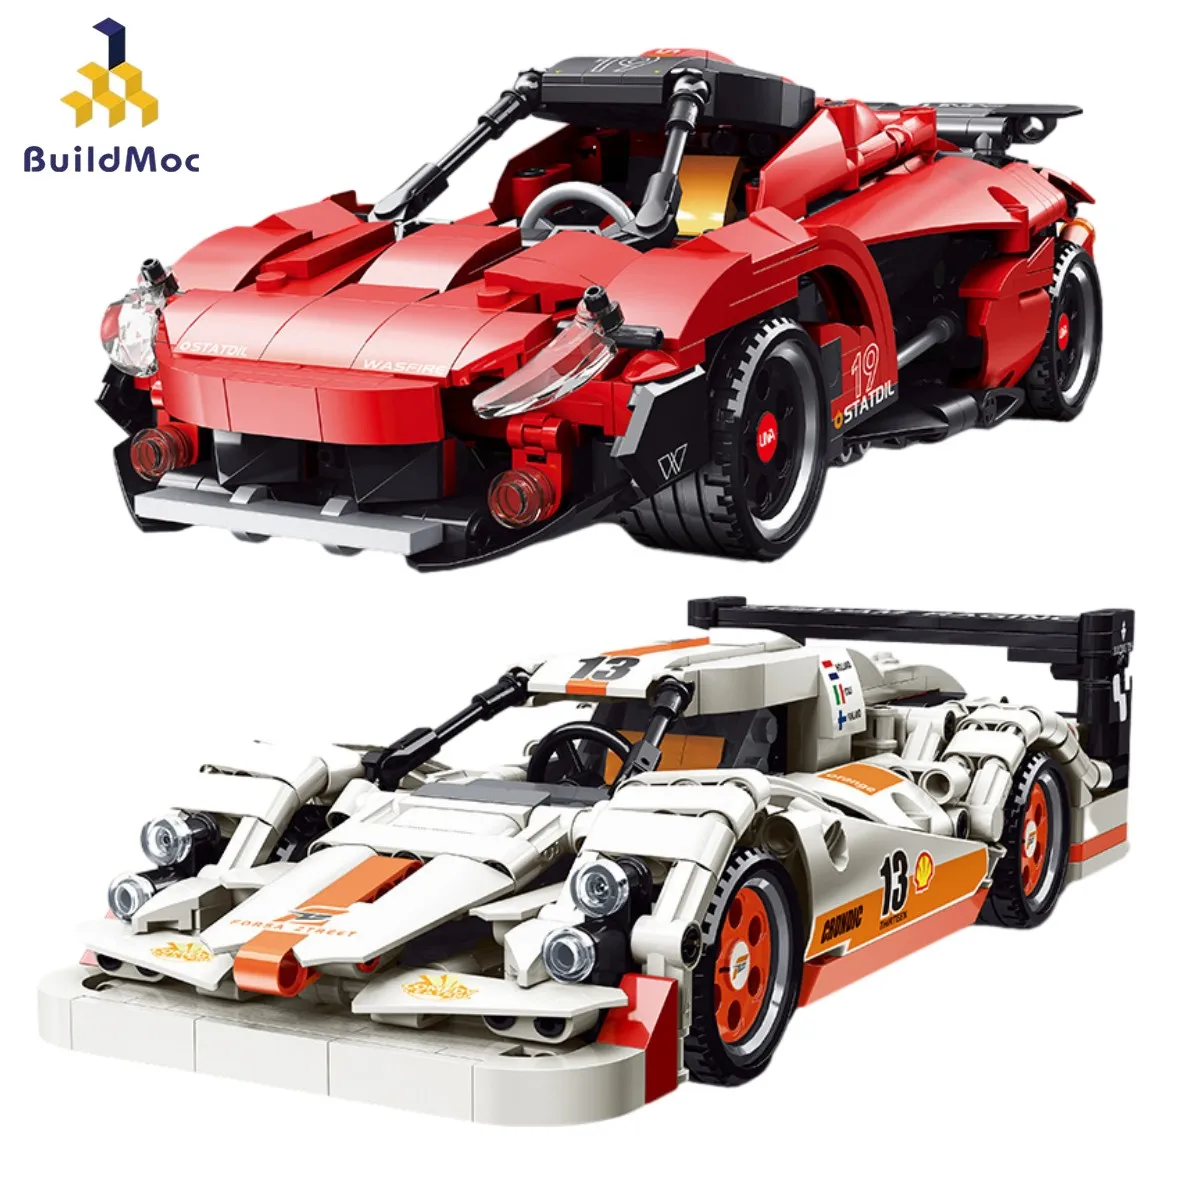 

Technical Series Sports Racing Car Bugatti Pors Model Building Blocks Pull Back MOC Bricks Set Toy for Children Boys Gifts